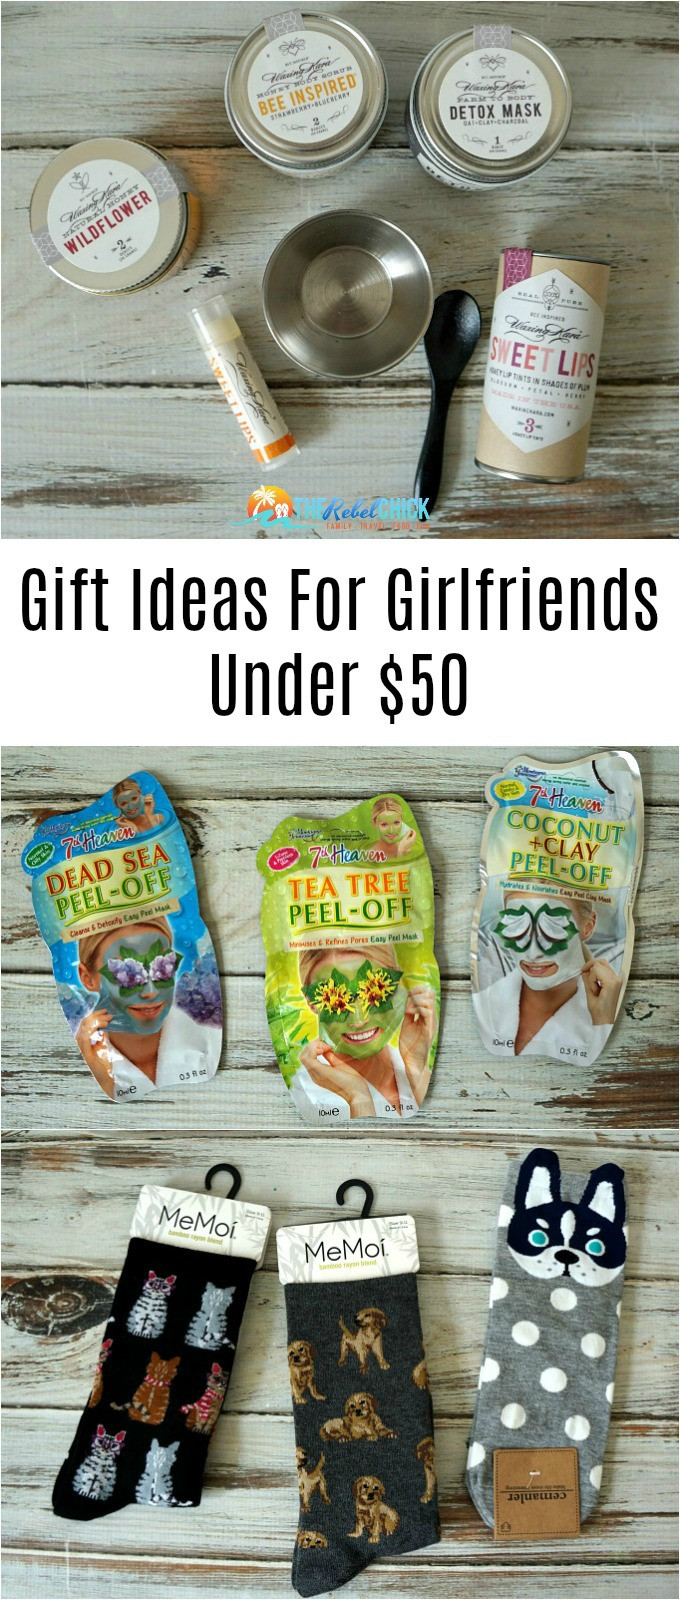 Girlfriends Gift Ideas
 Gift Ideas For Girlfriends Under $50 The Rebel Chick